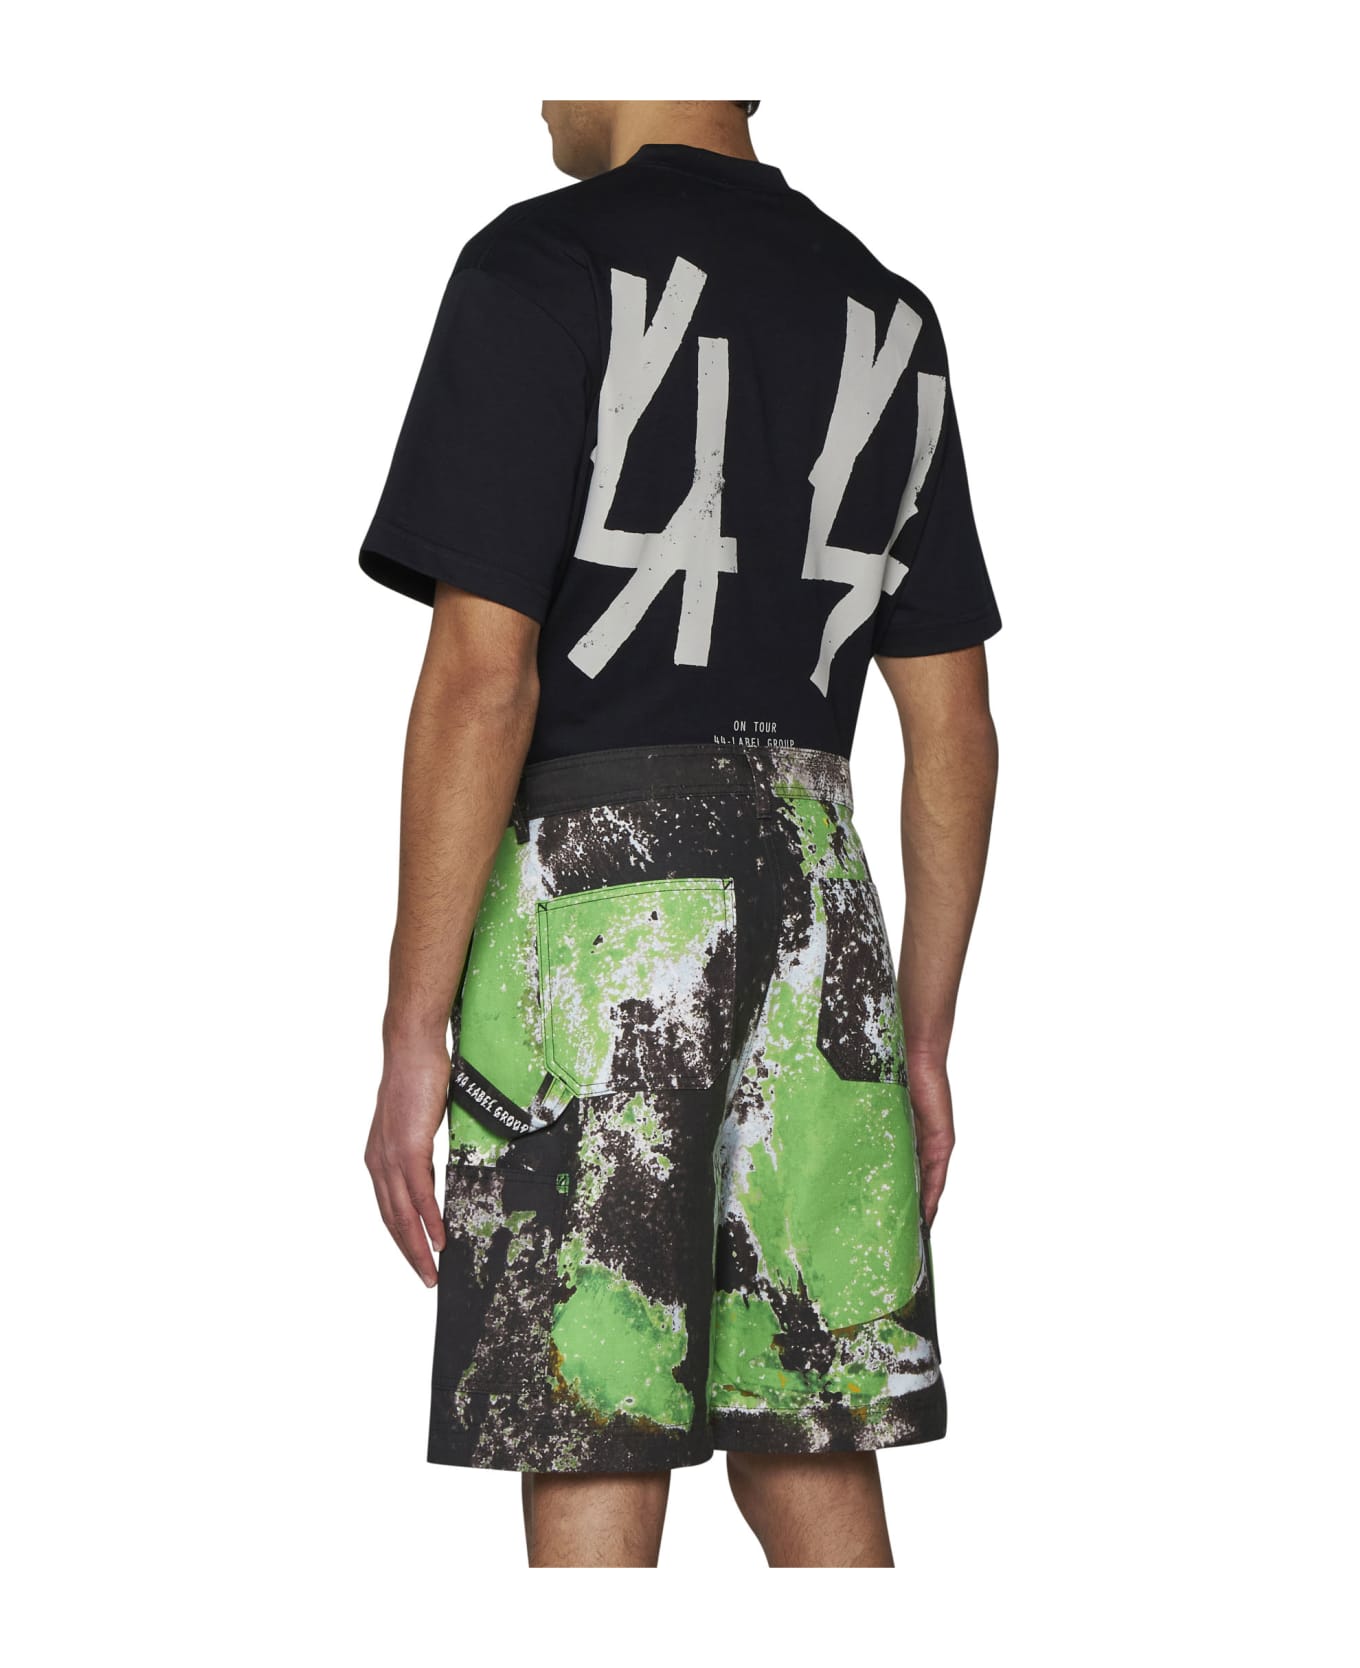 44 Label Group Shorts - Black+grunge green ショートパンツ